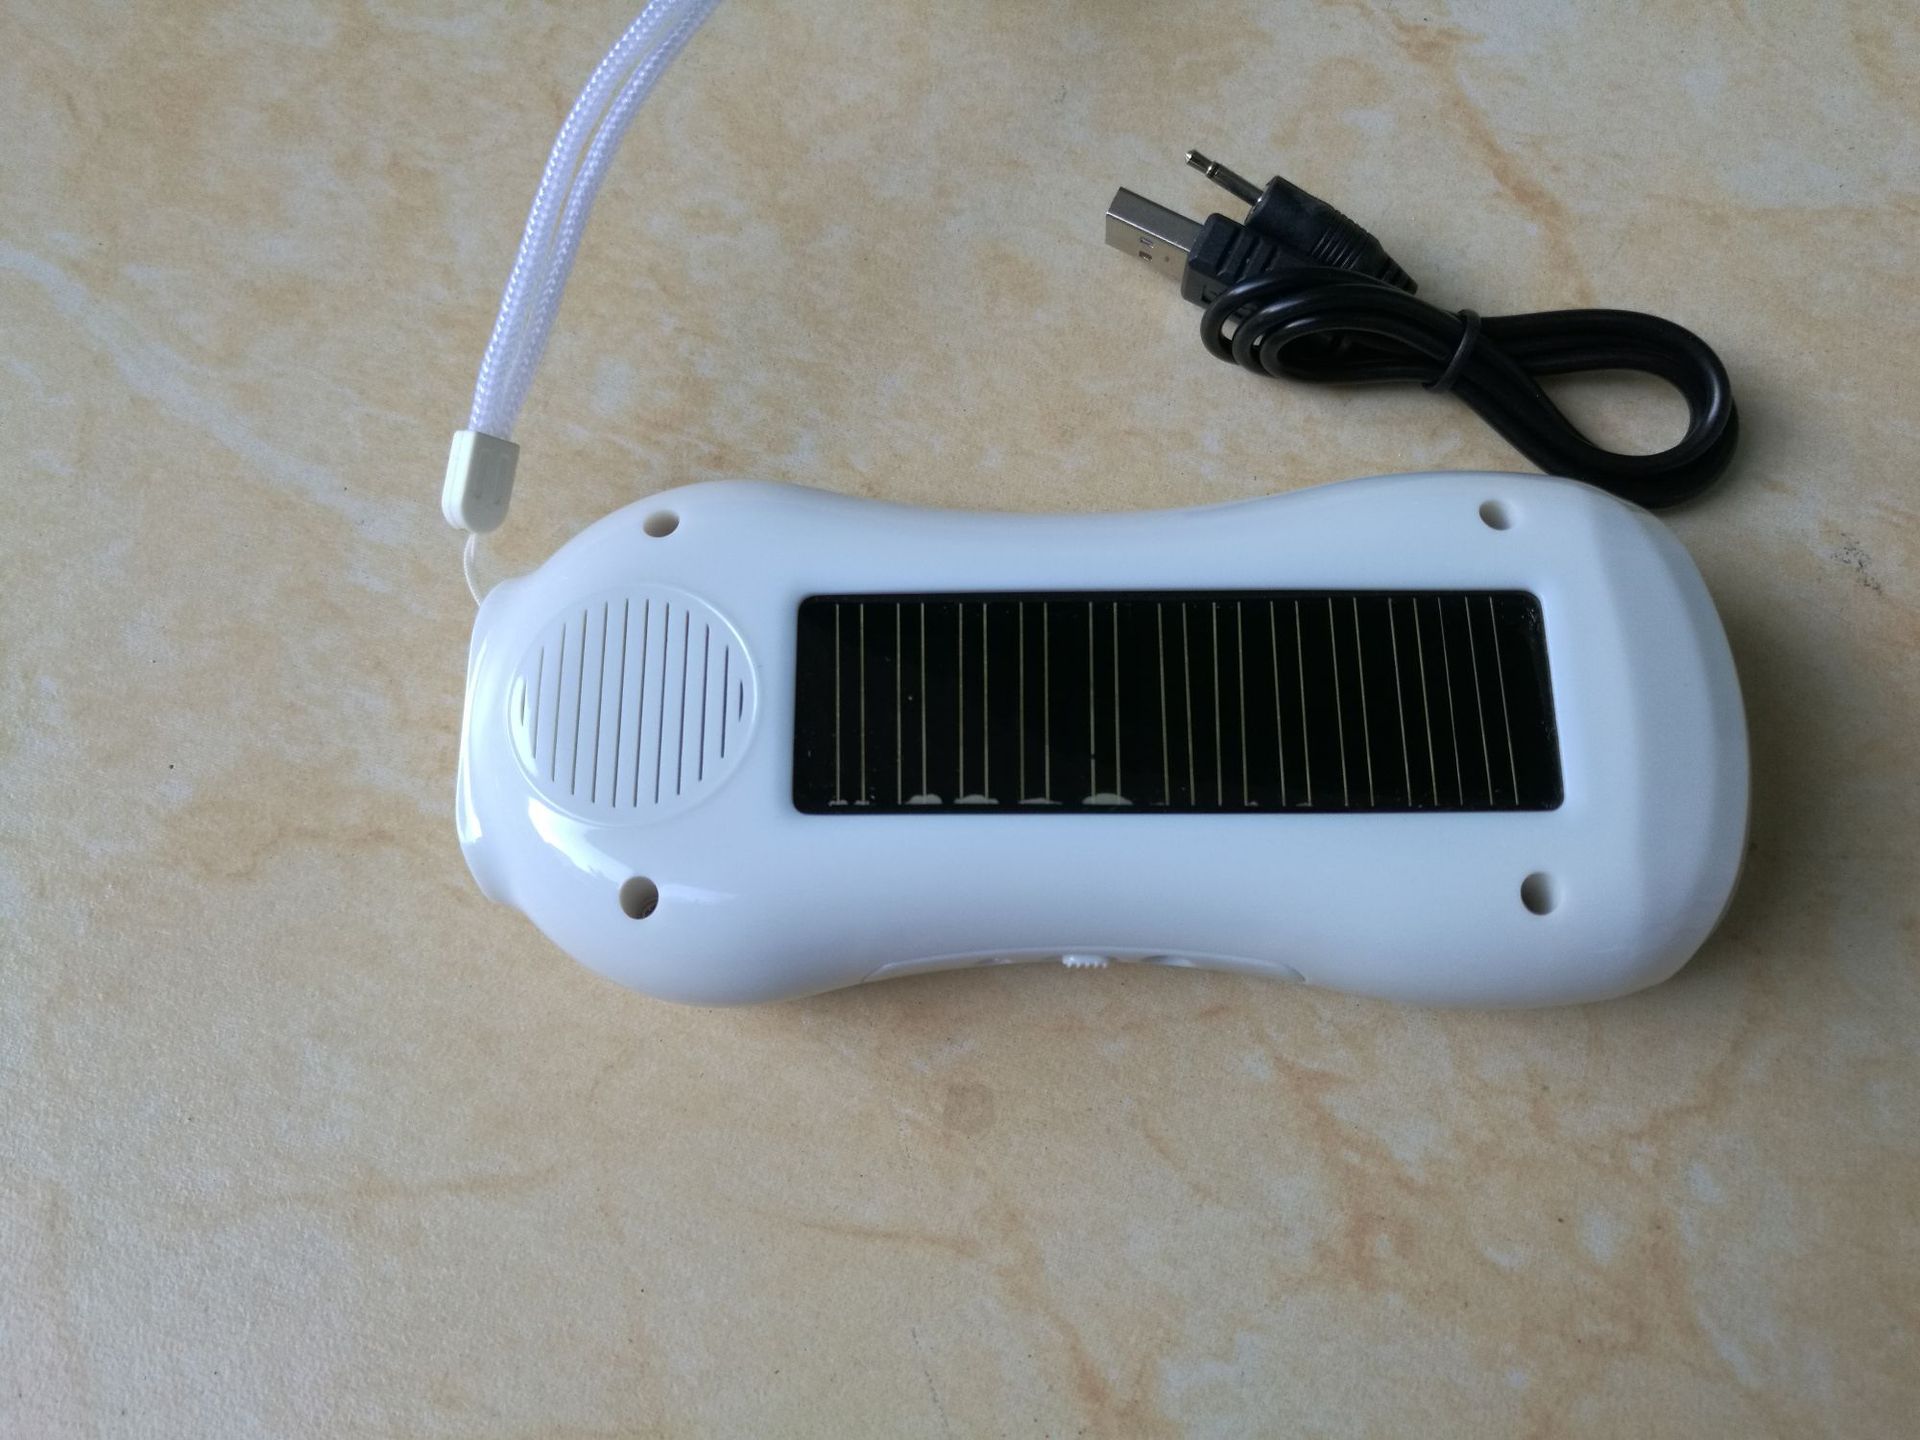 Chargeur solaire - 5.5 V - batterie 600 mAh - Ref 3395900 Image 3